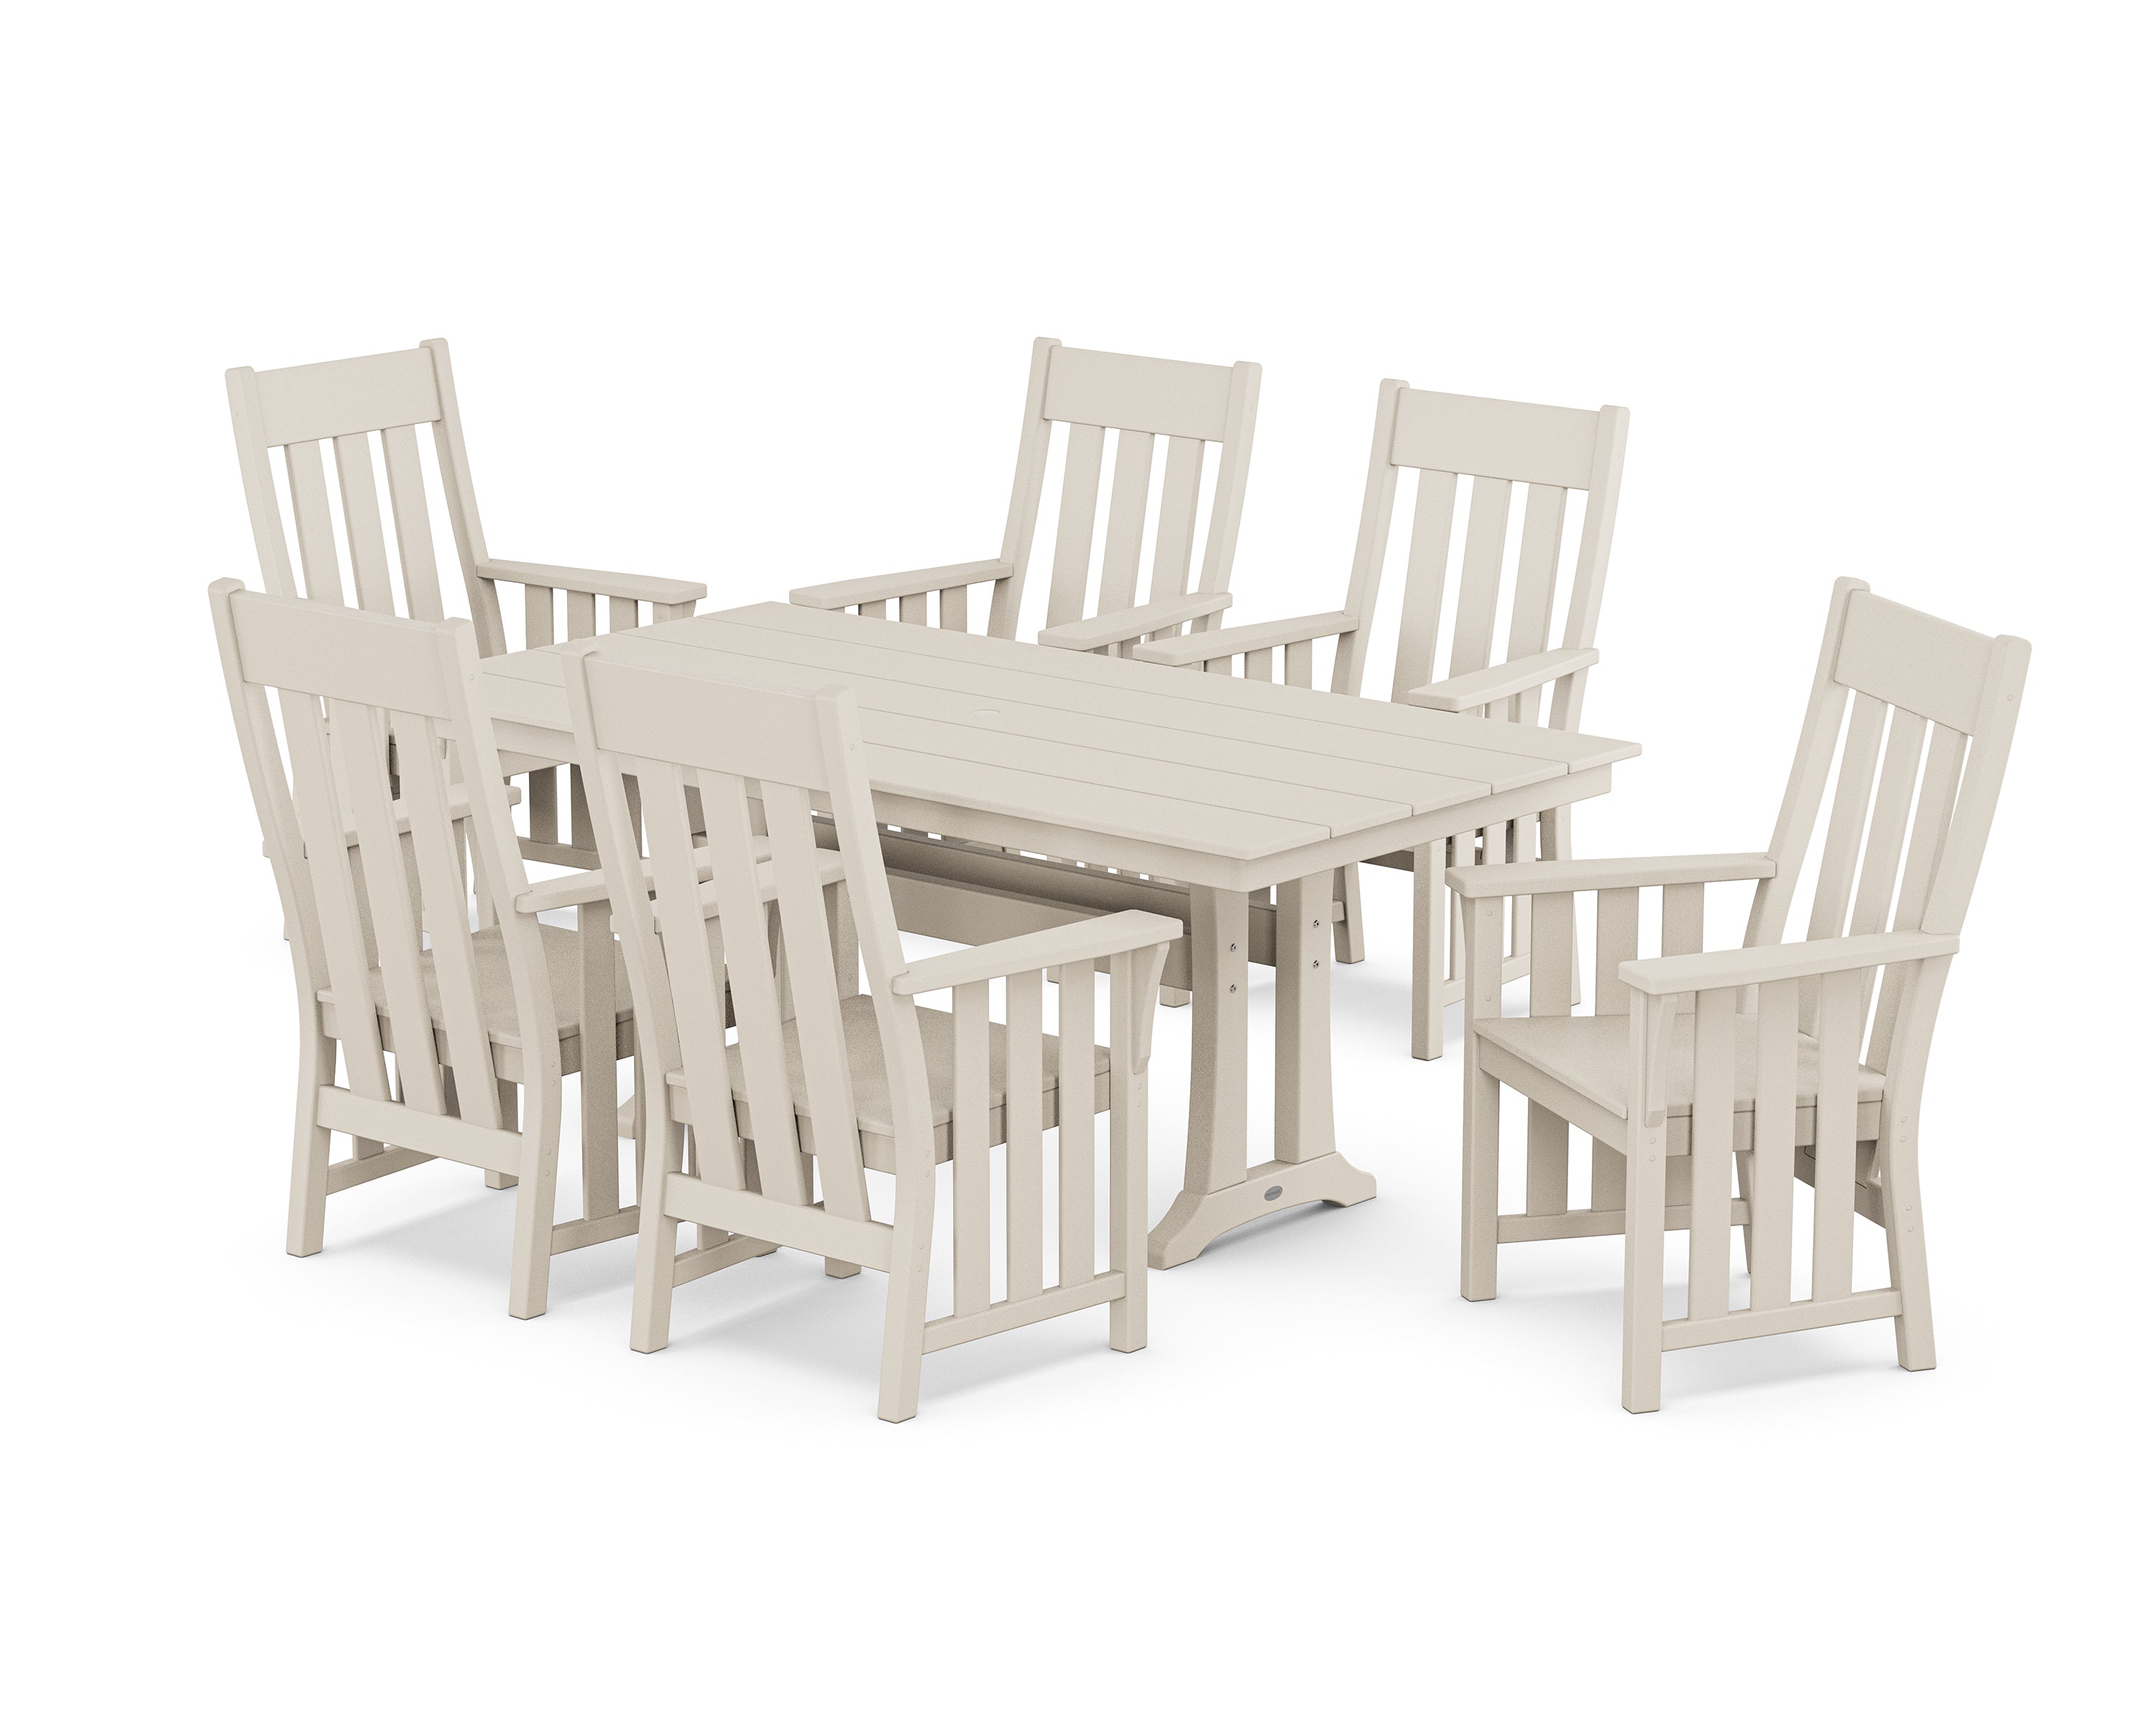 Martha Stewart by POLYWOOD® Acadia Arm Chair 7-Piece Farmhouse Dining Set with Trestle Legs in Sand